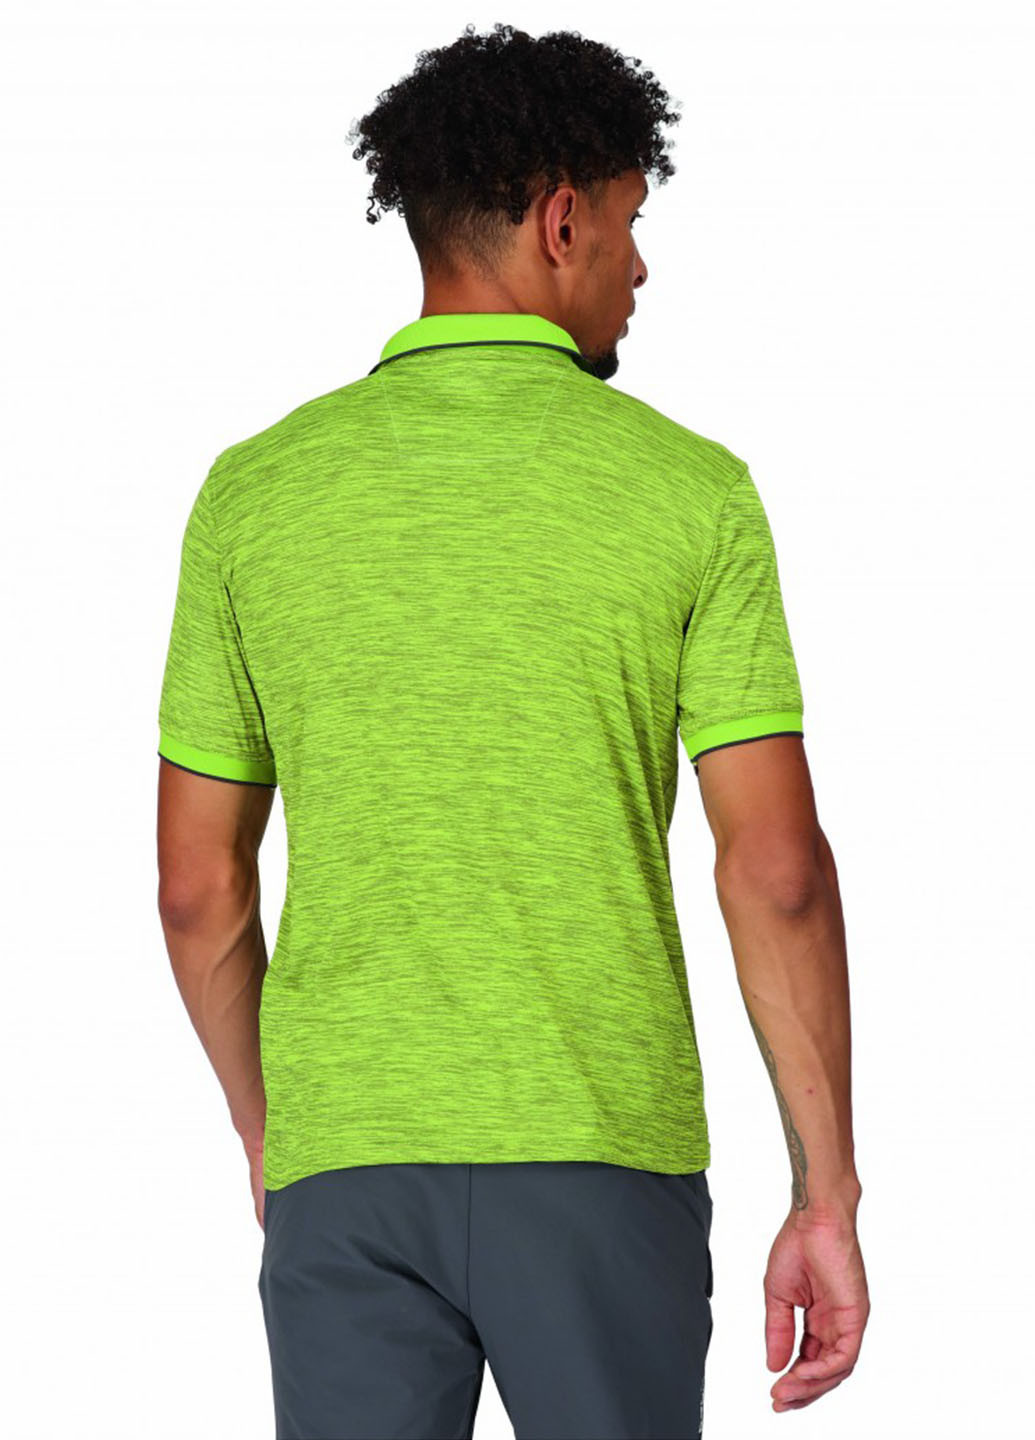 Зеленая футболка-поло для мужчин Regatta меланжевая